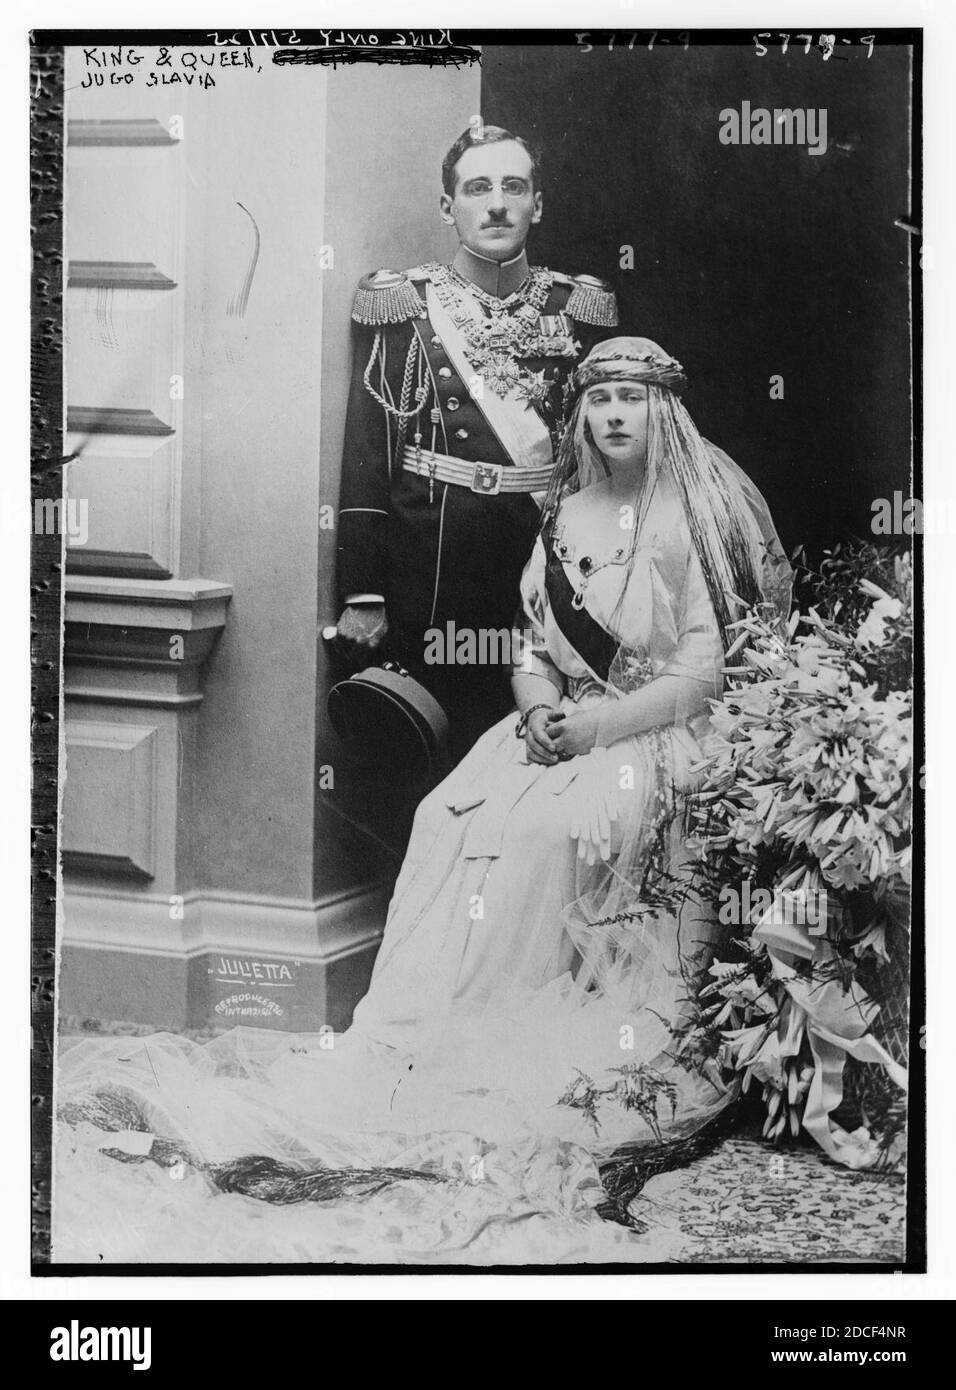 King and Queen Jugoslavia (i.e. Yugoslavia) Stock Photo